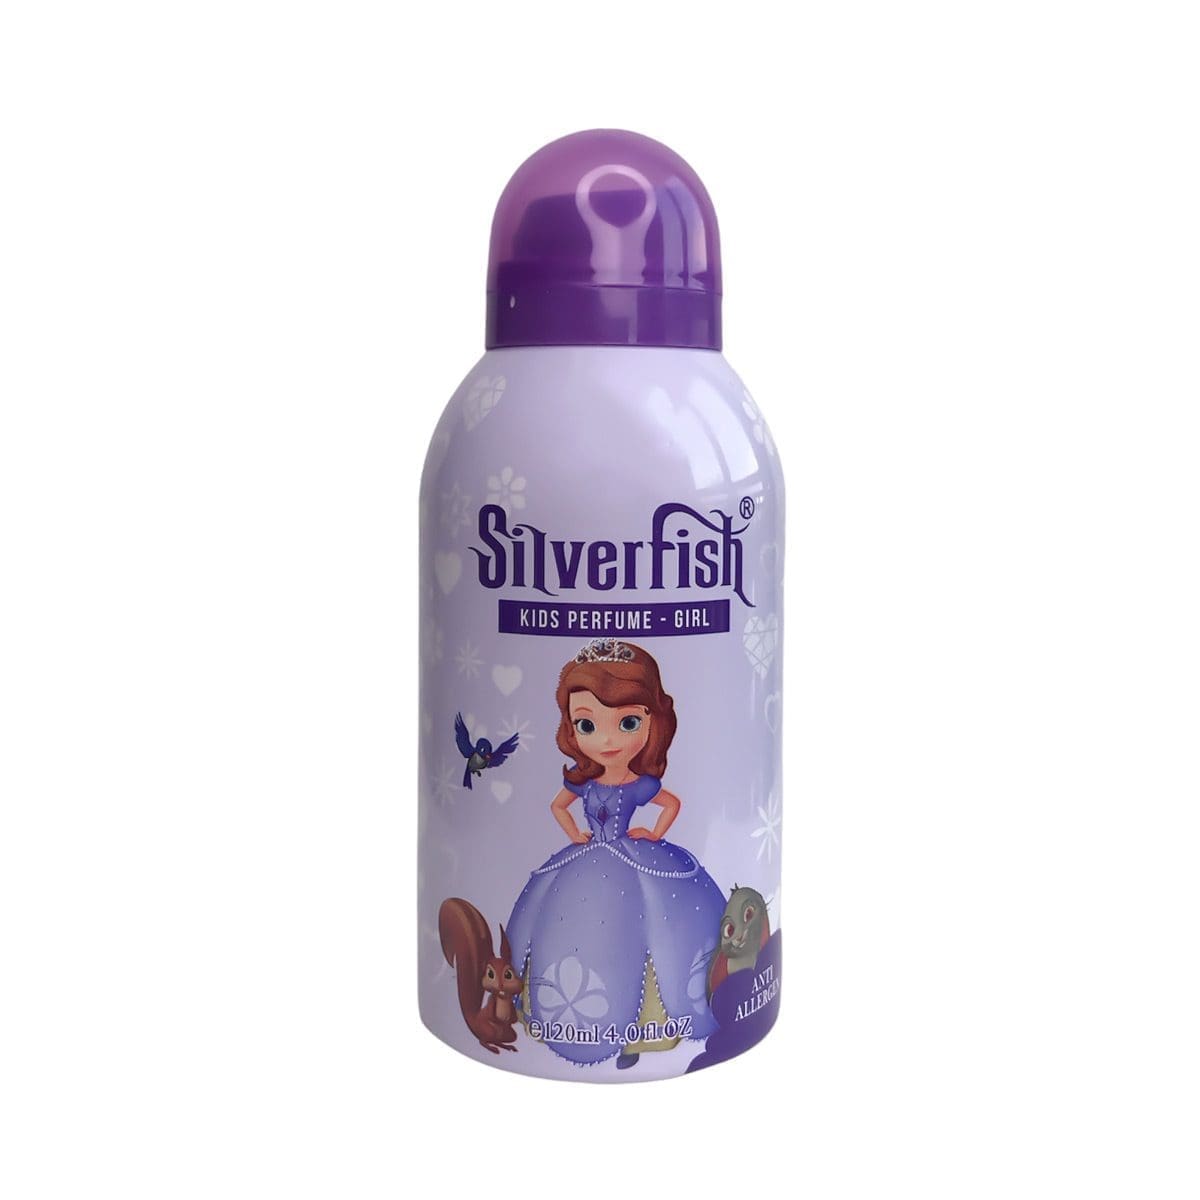 3282 Silver Fish Kids Perfume, Girl120ml